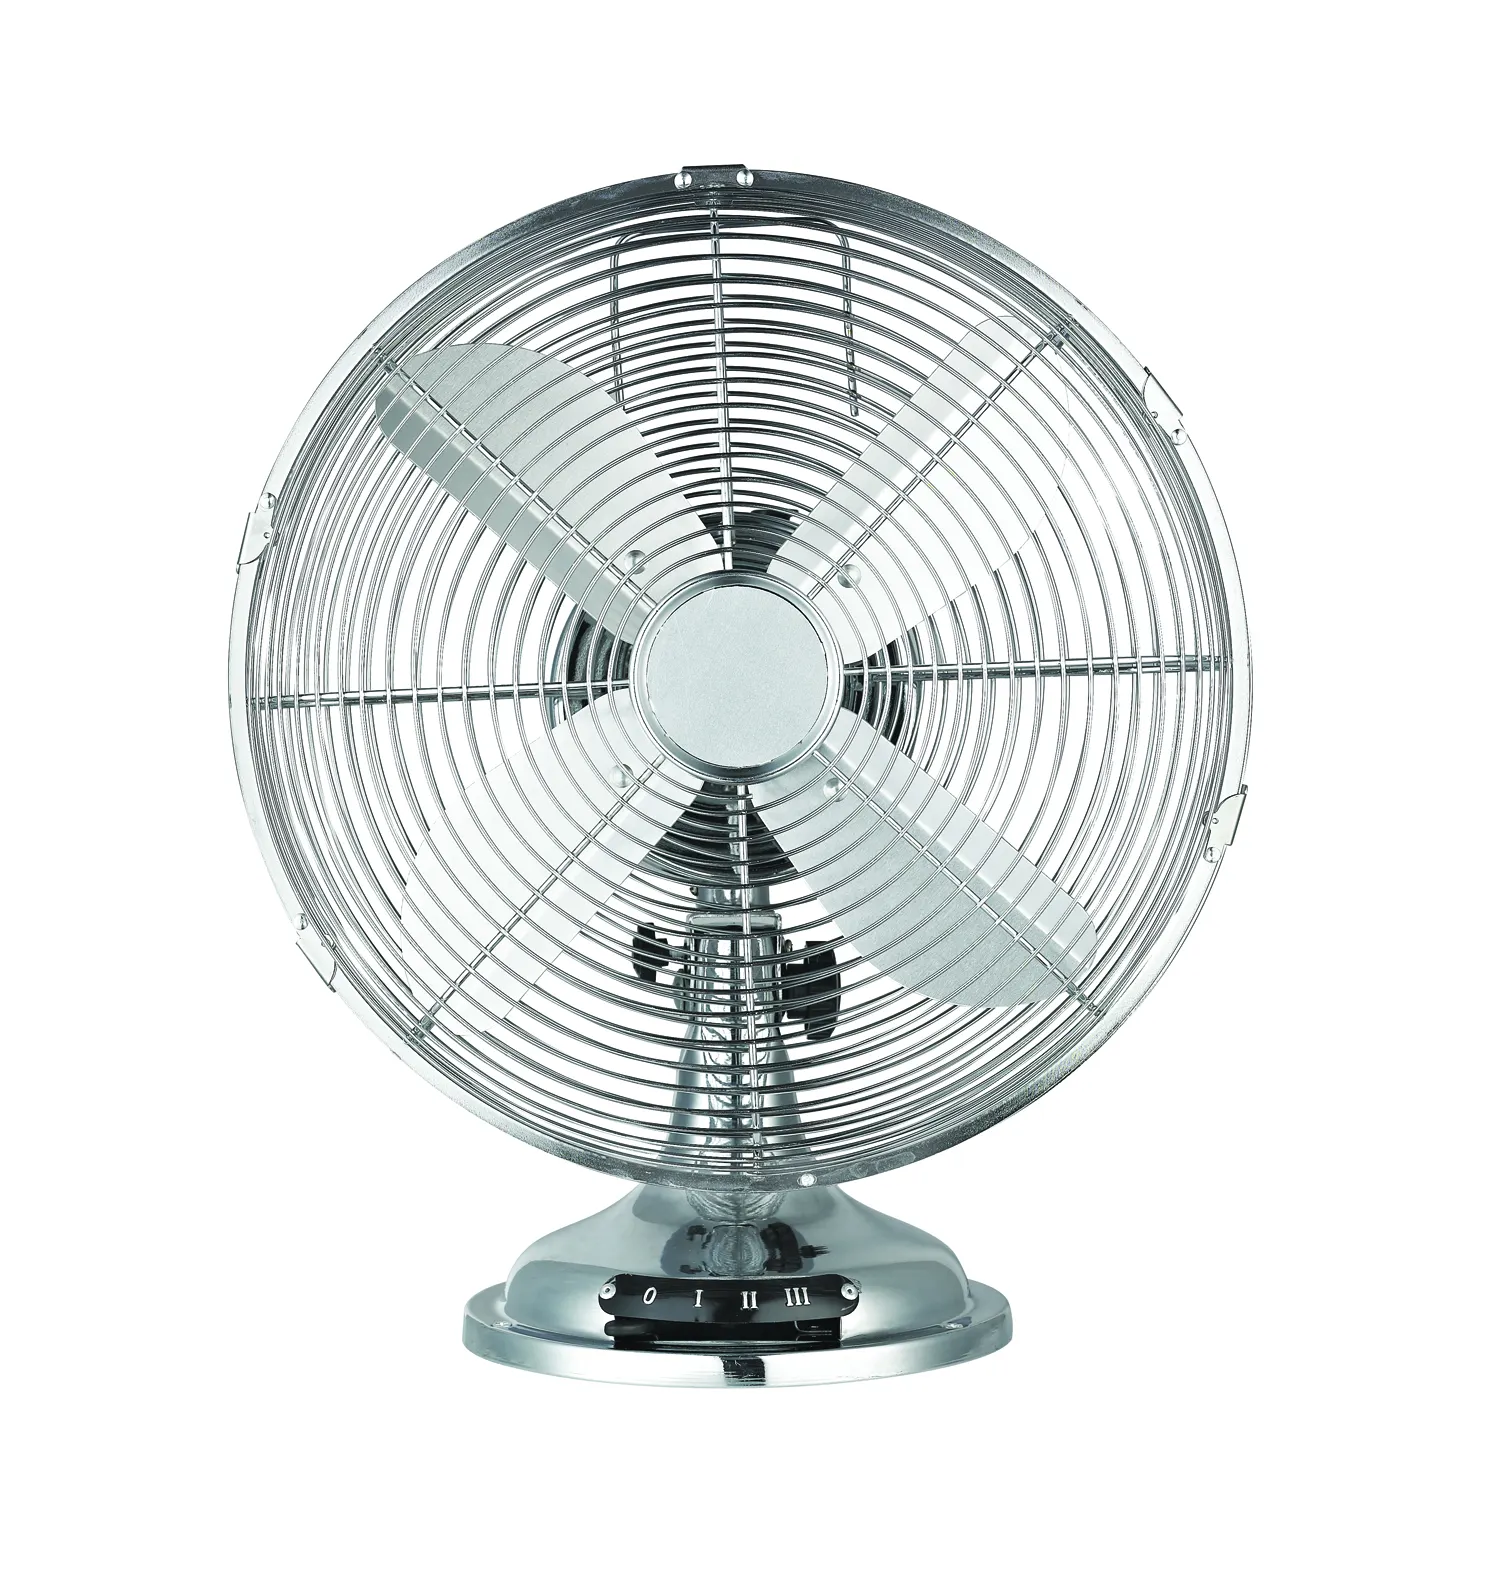 Hot Sale Abluft ventilator kommerziellen Ventilator industrielle tragbare Tisch ventilator